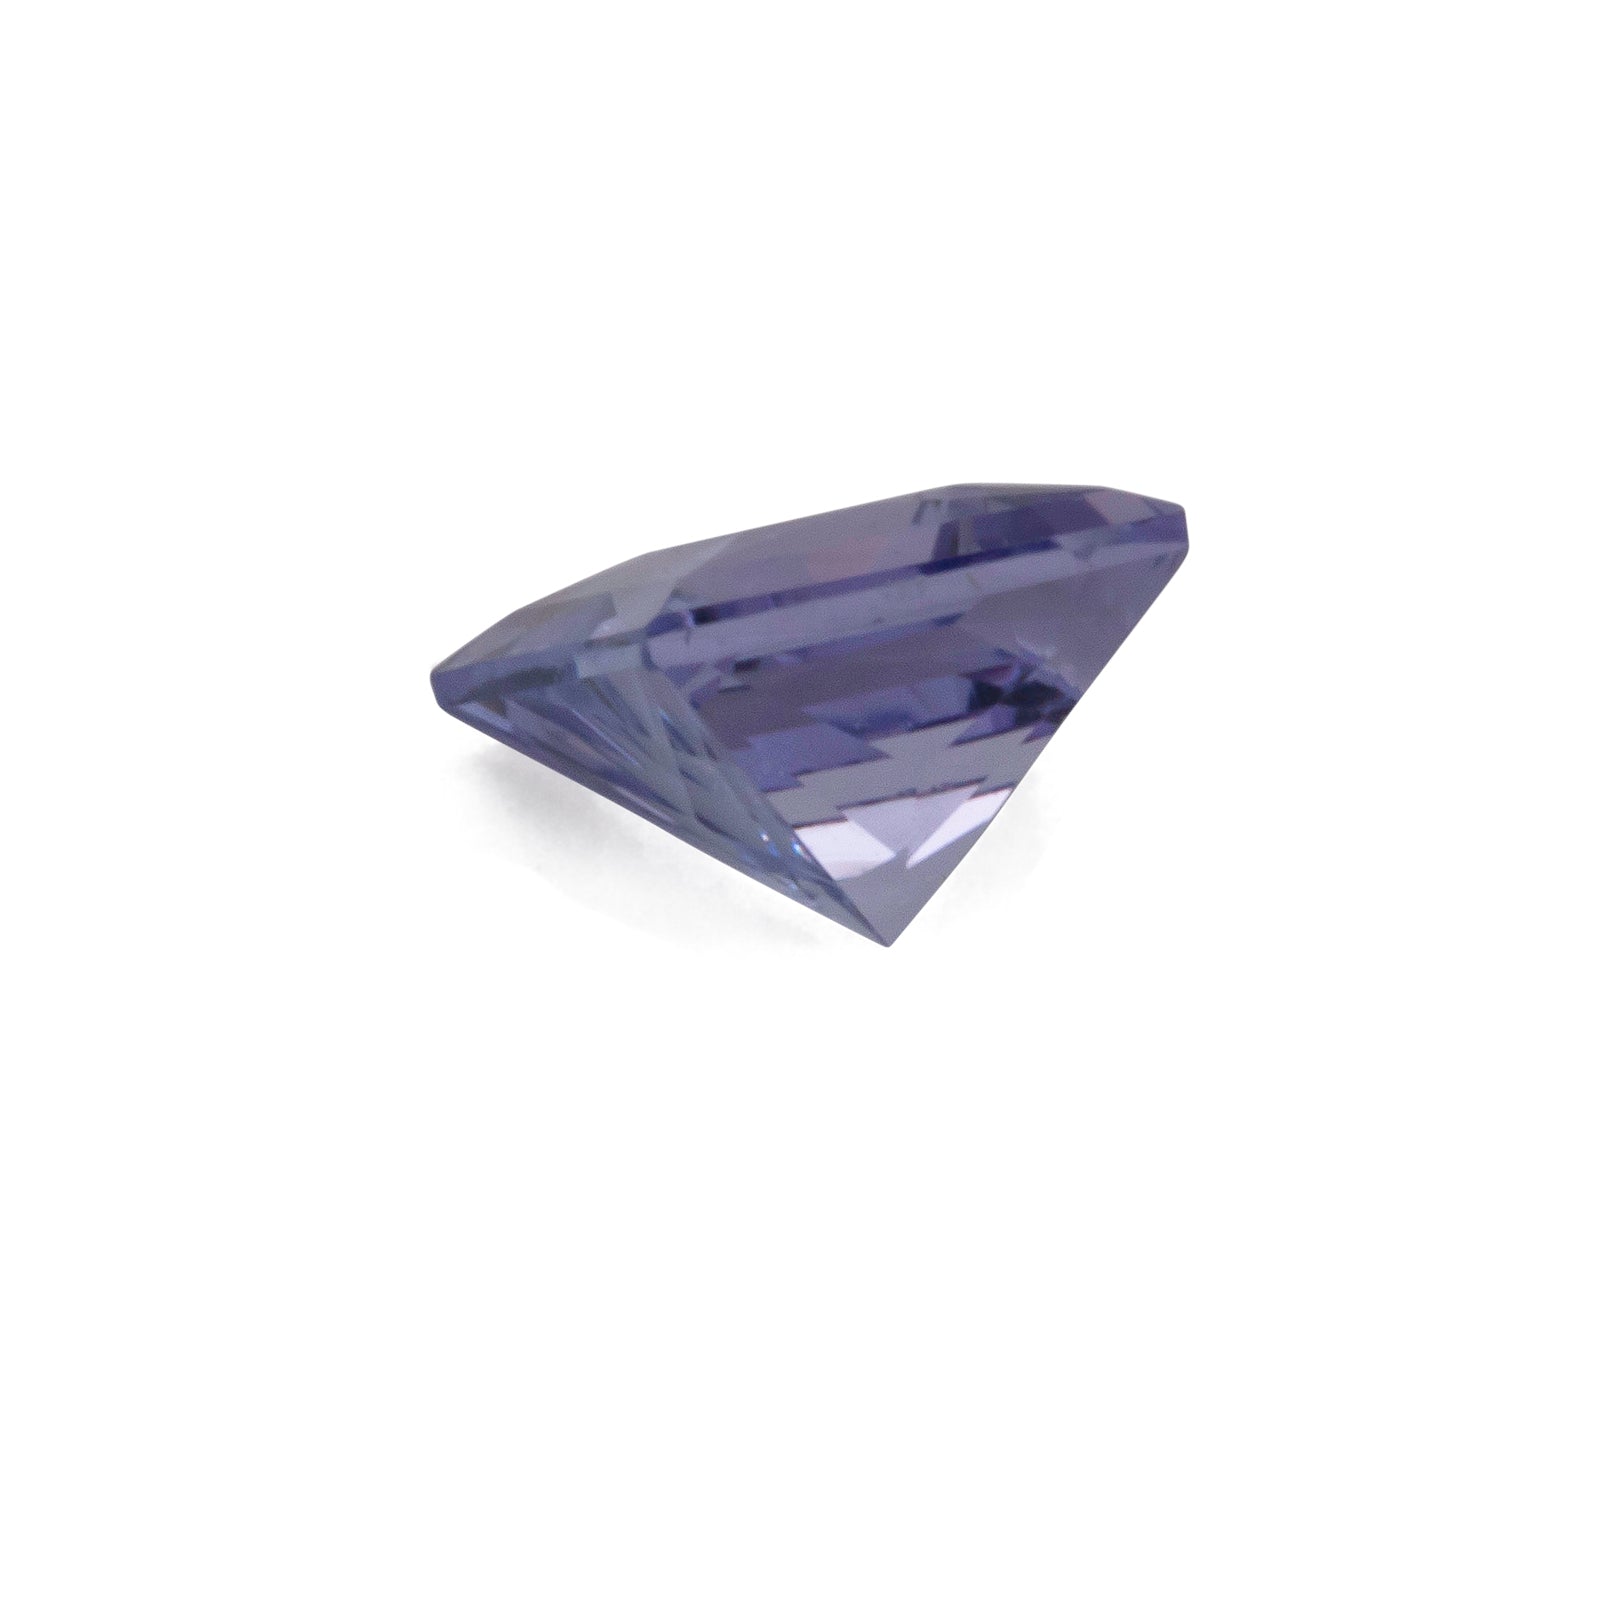 Tanzanite - A, square, 3.5x3.5 mm, 0.20-0.29 cts, No. TZ71001